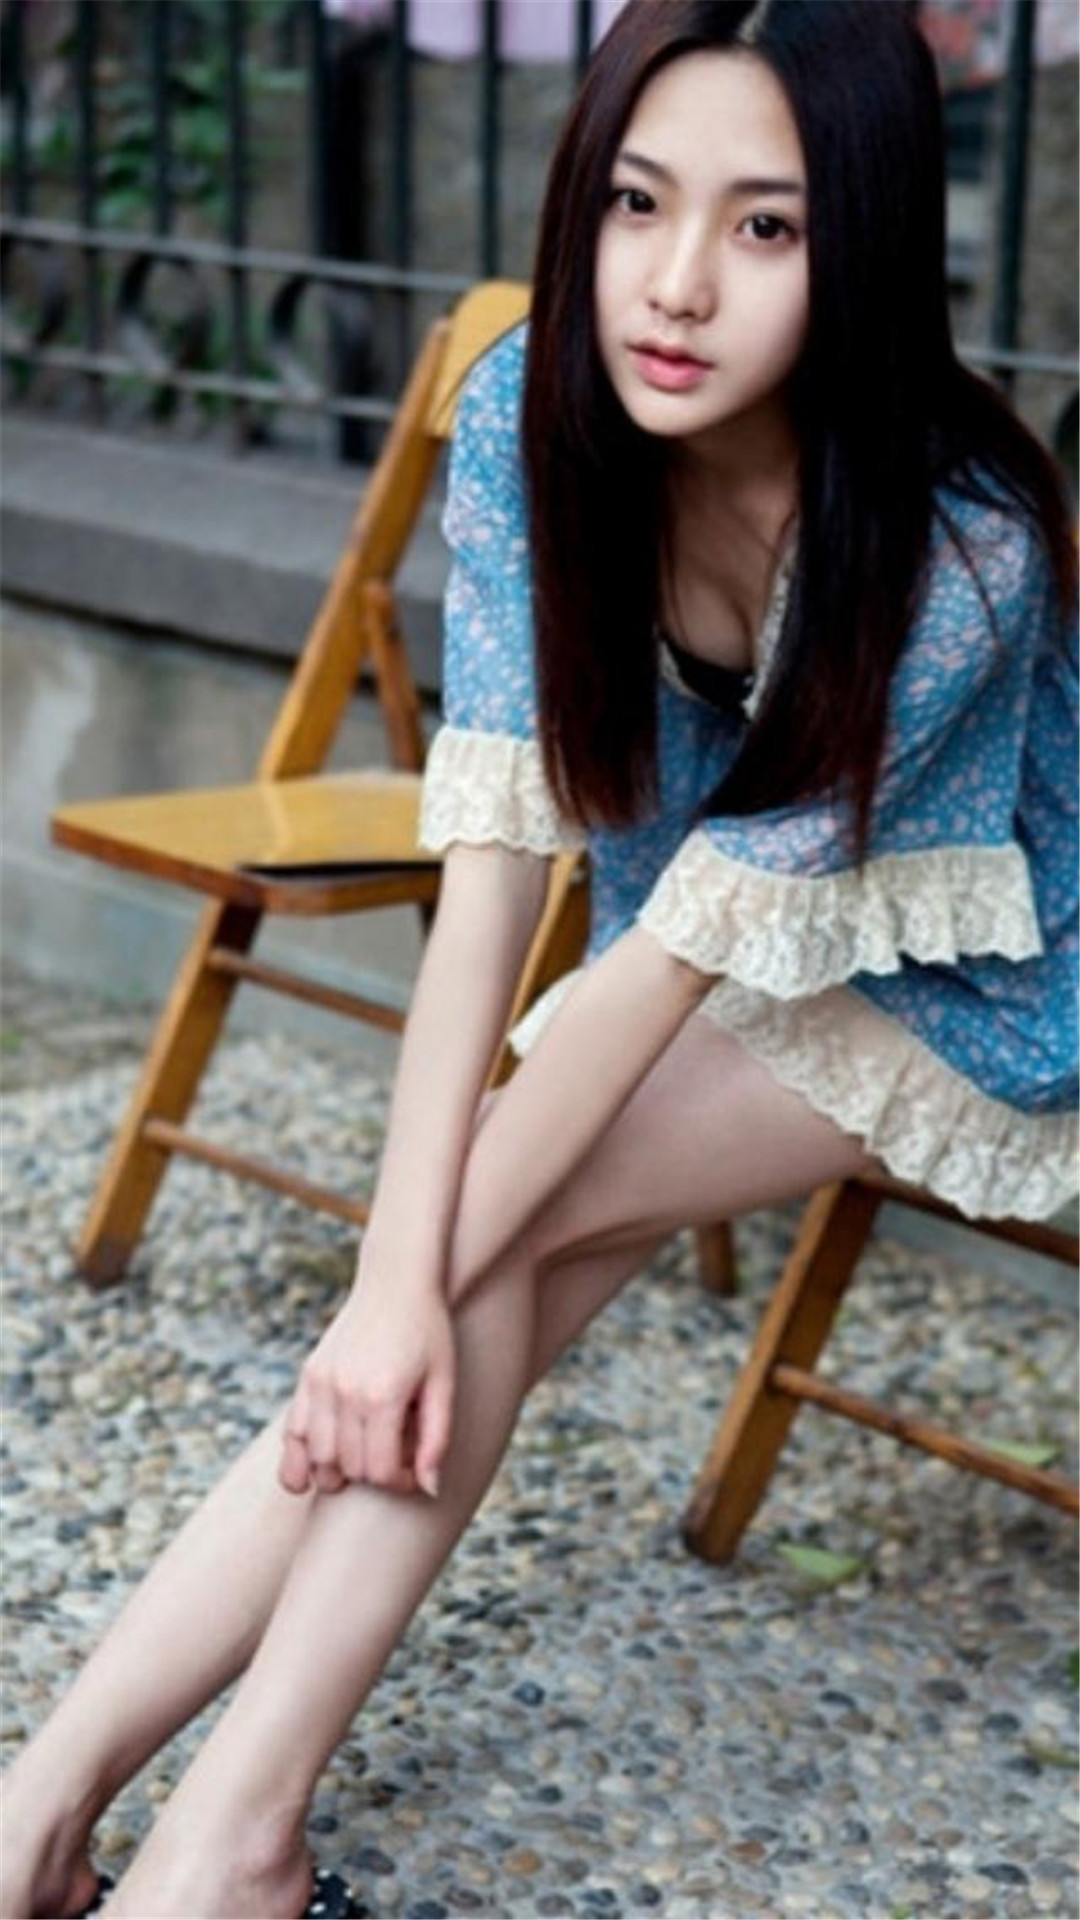 Asian Girl Wallpaper Iphone - HD Wallpaper 